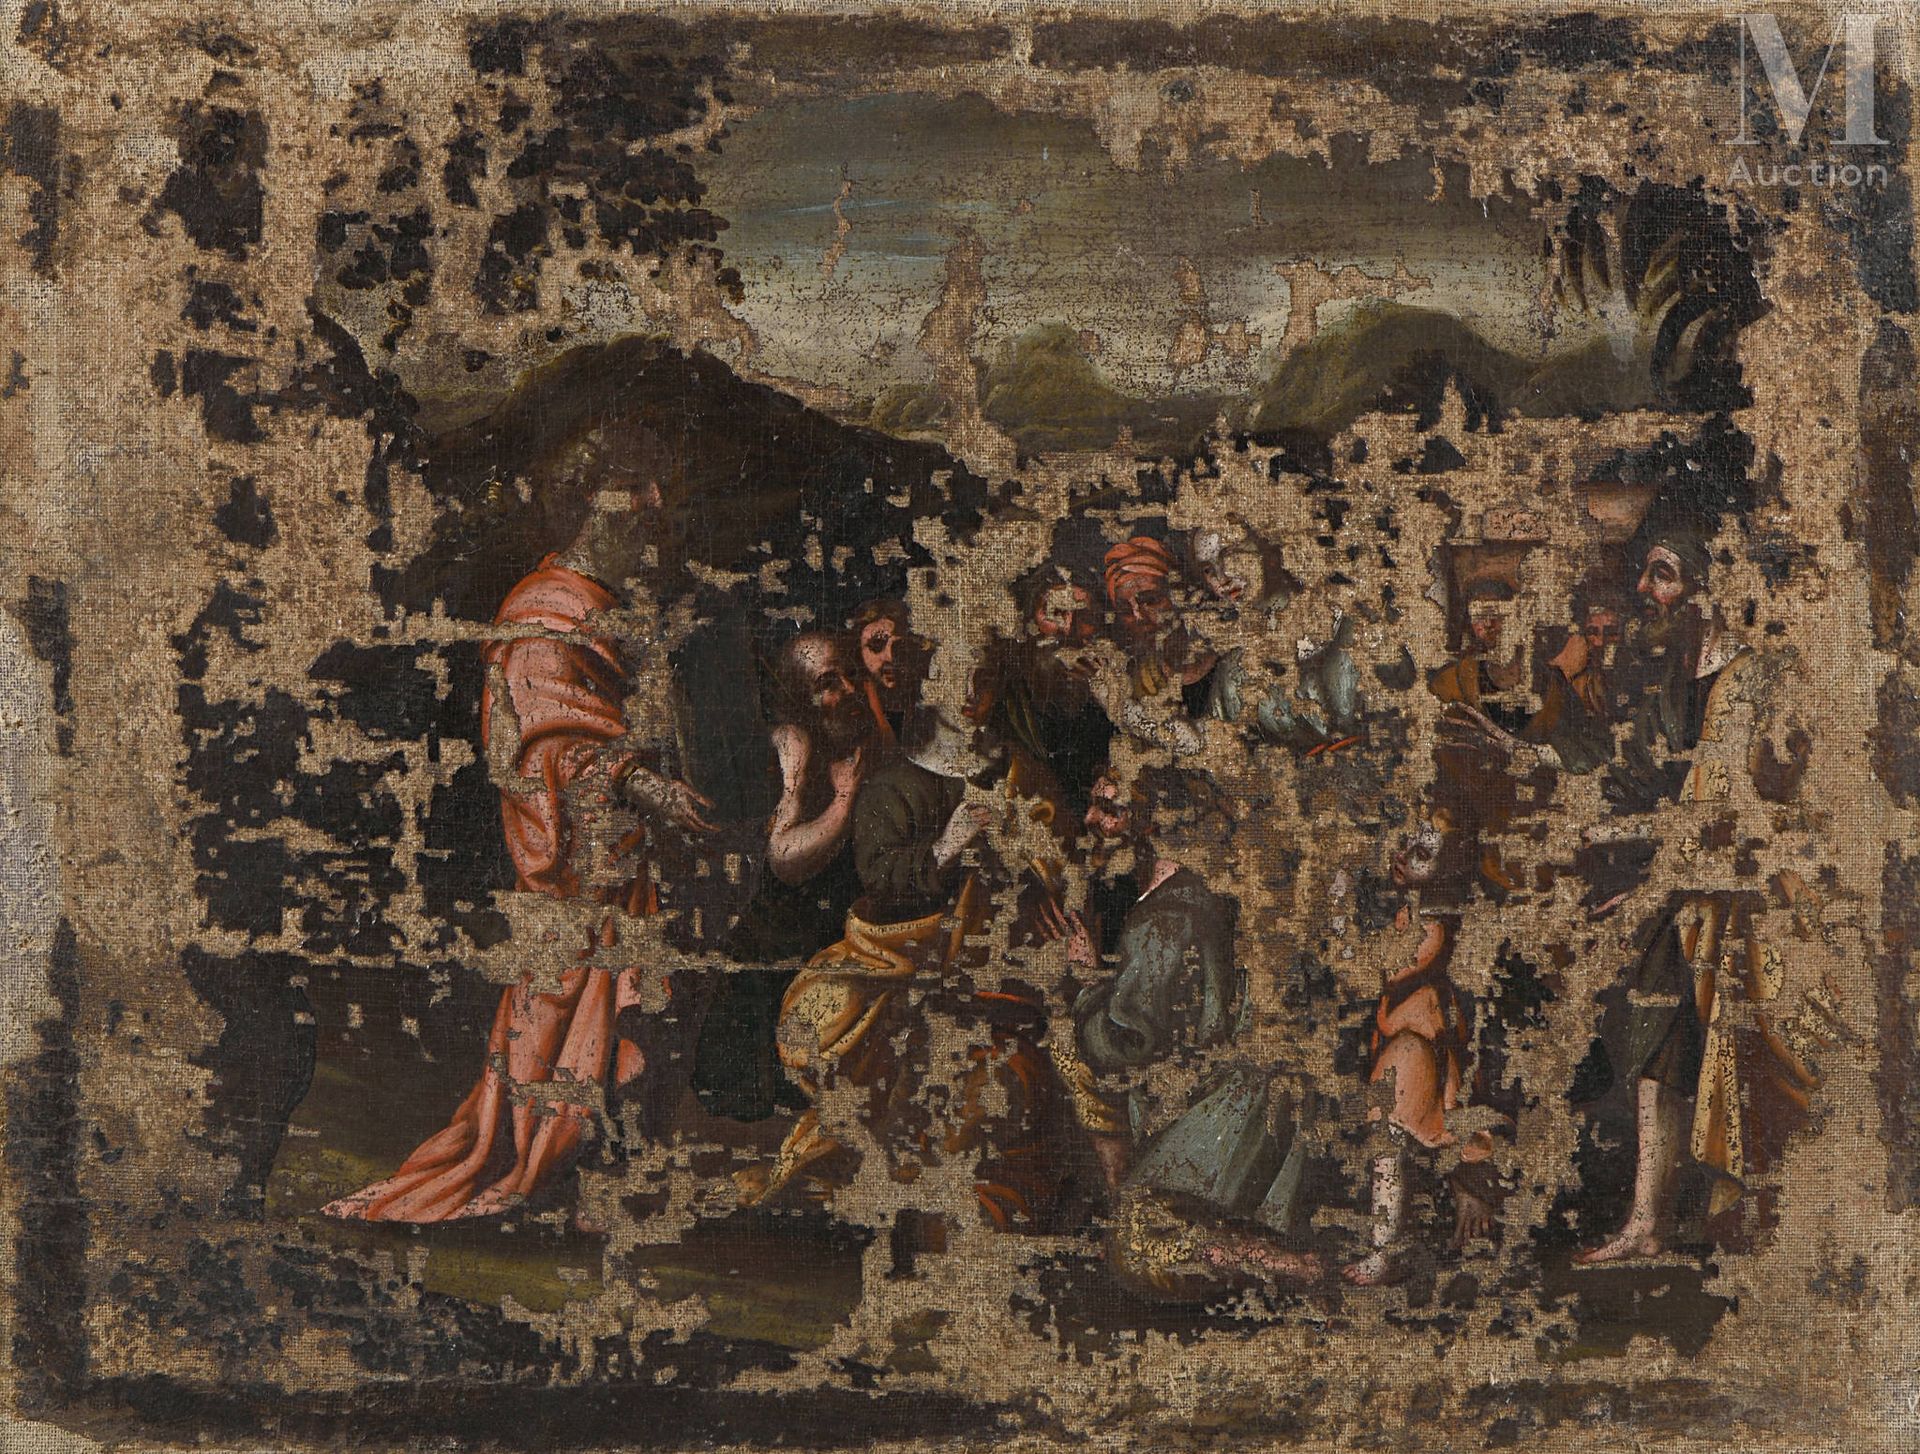 École ITALIENNE du XVIIème siècle Cristo y los apóstoles

En su lienzo original
&hellip;